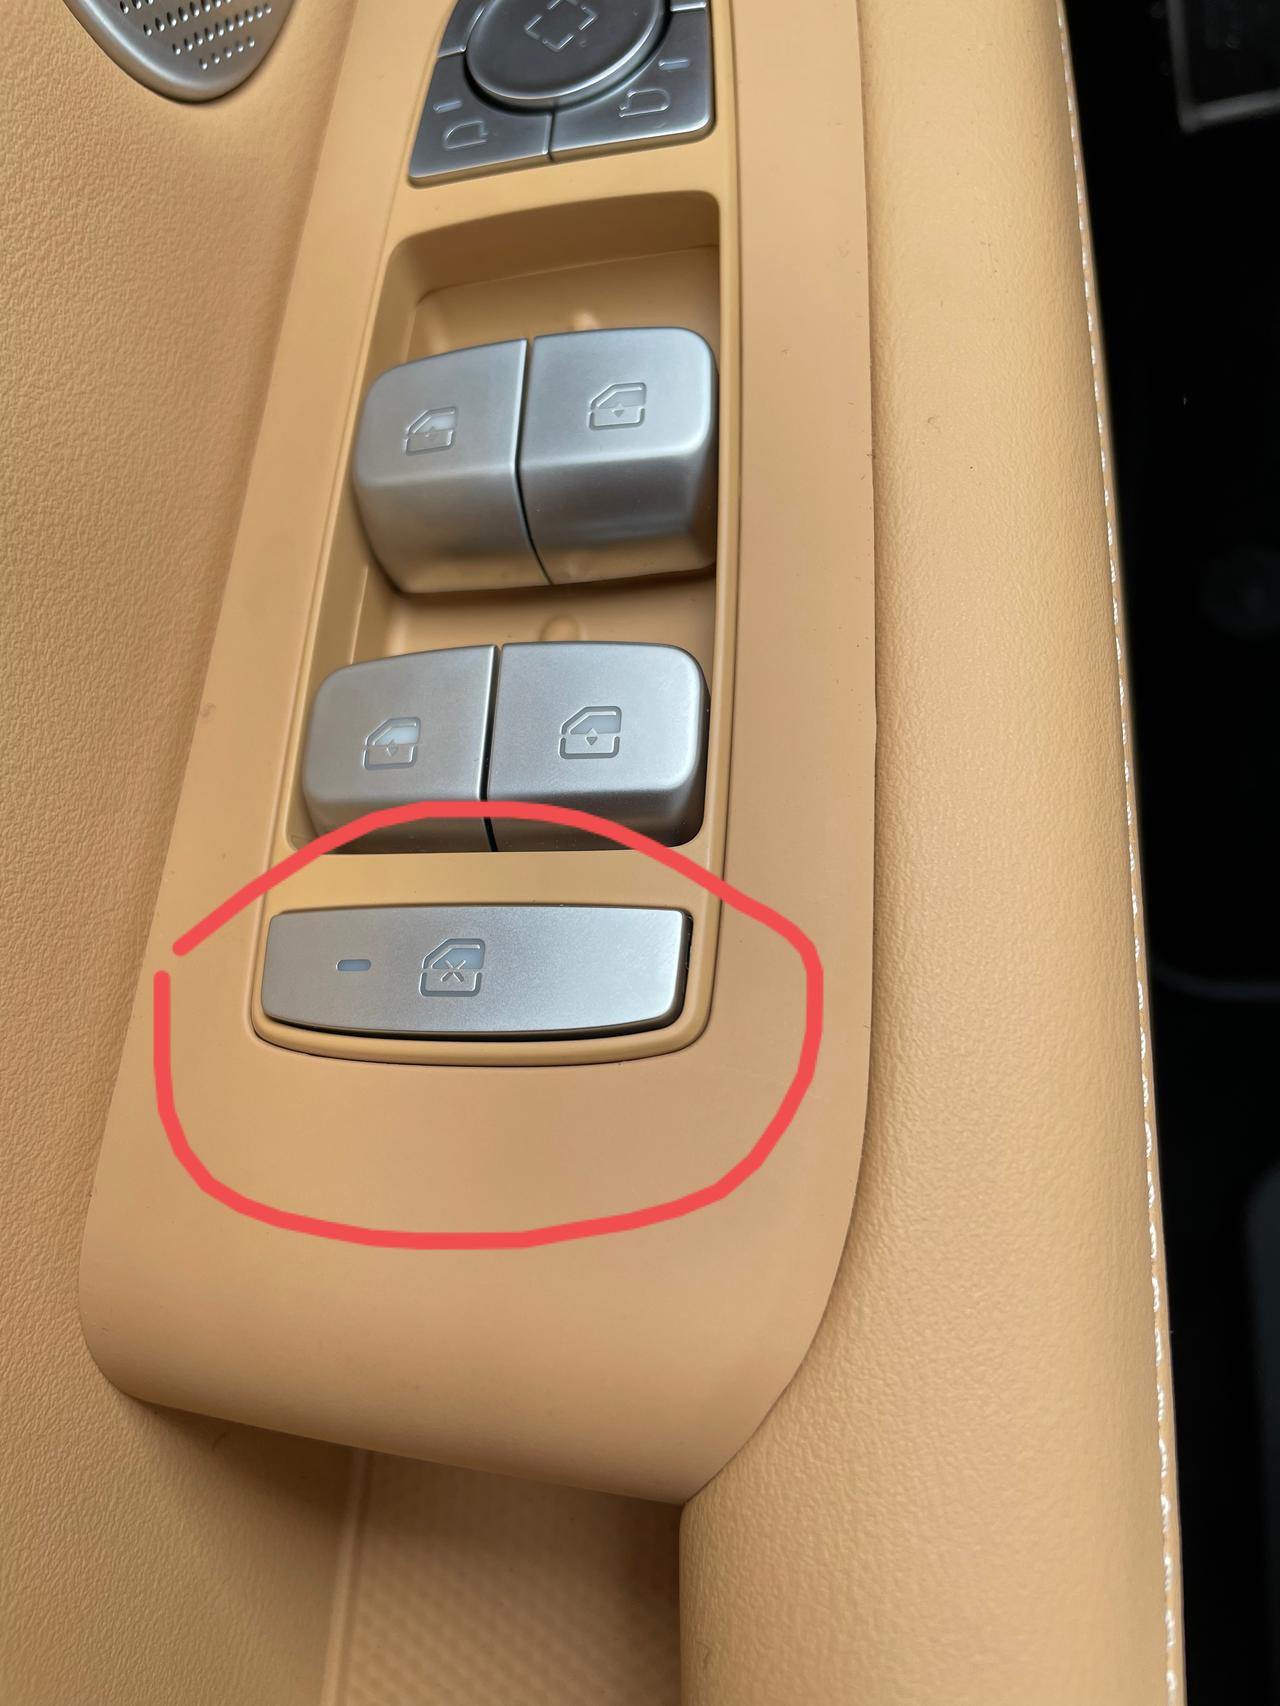 AITO问界M5 车窗上这个按钮是做啥的？